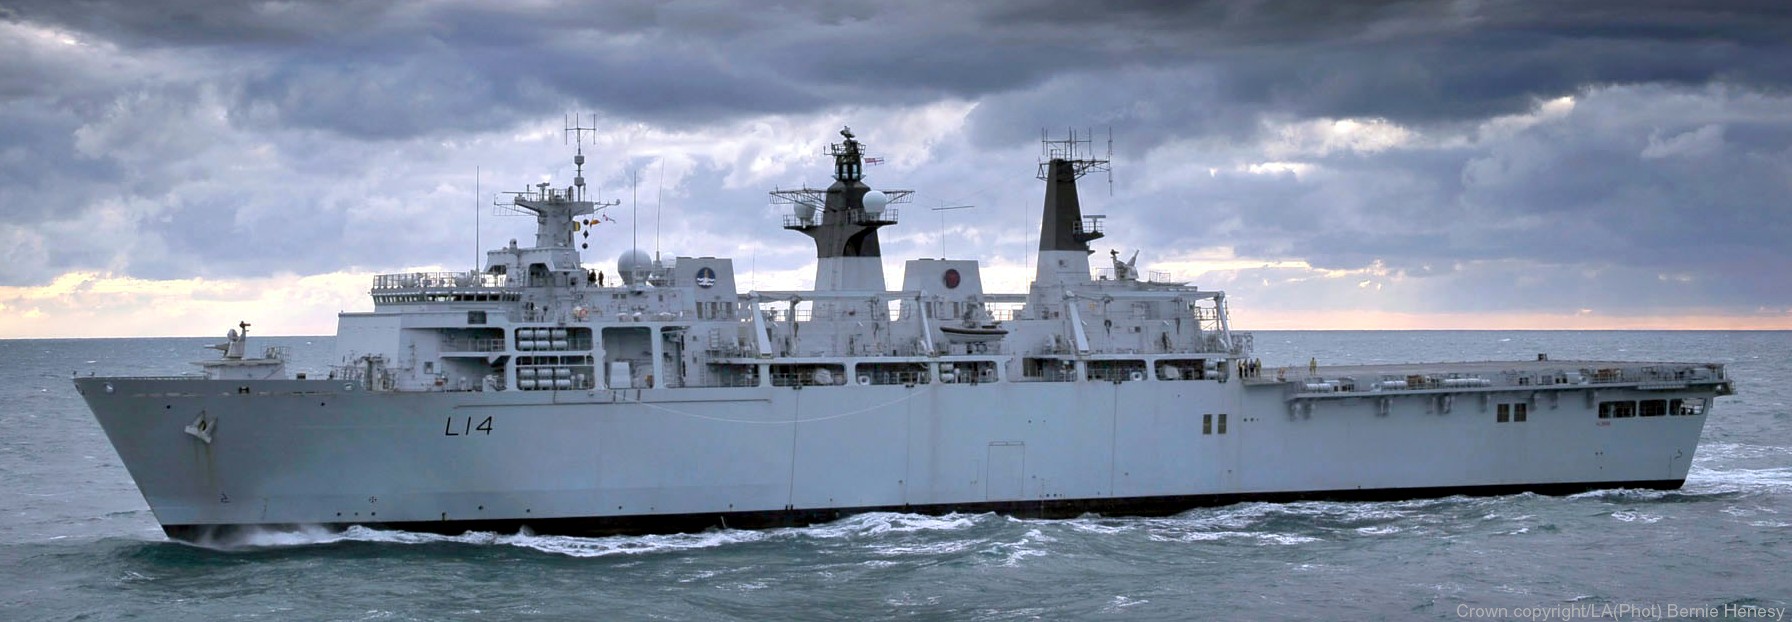 hms albion l-14 amphibious transport dock landing platform ship lpd royal navy 10